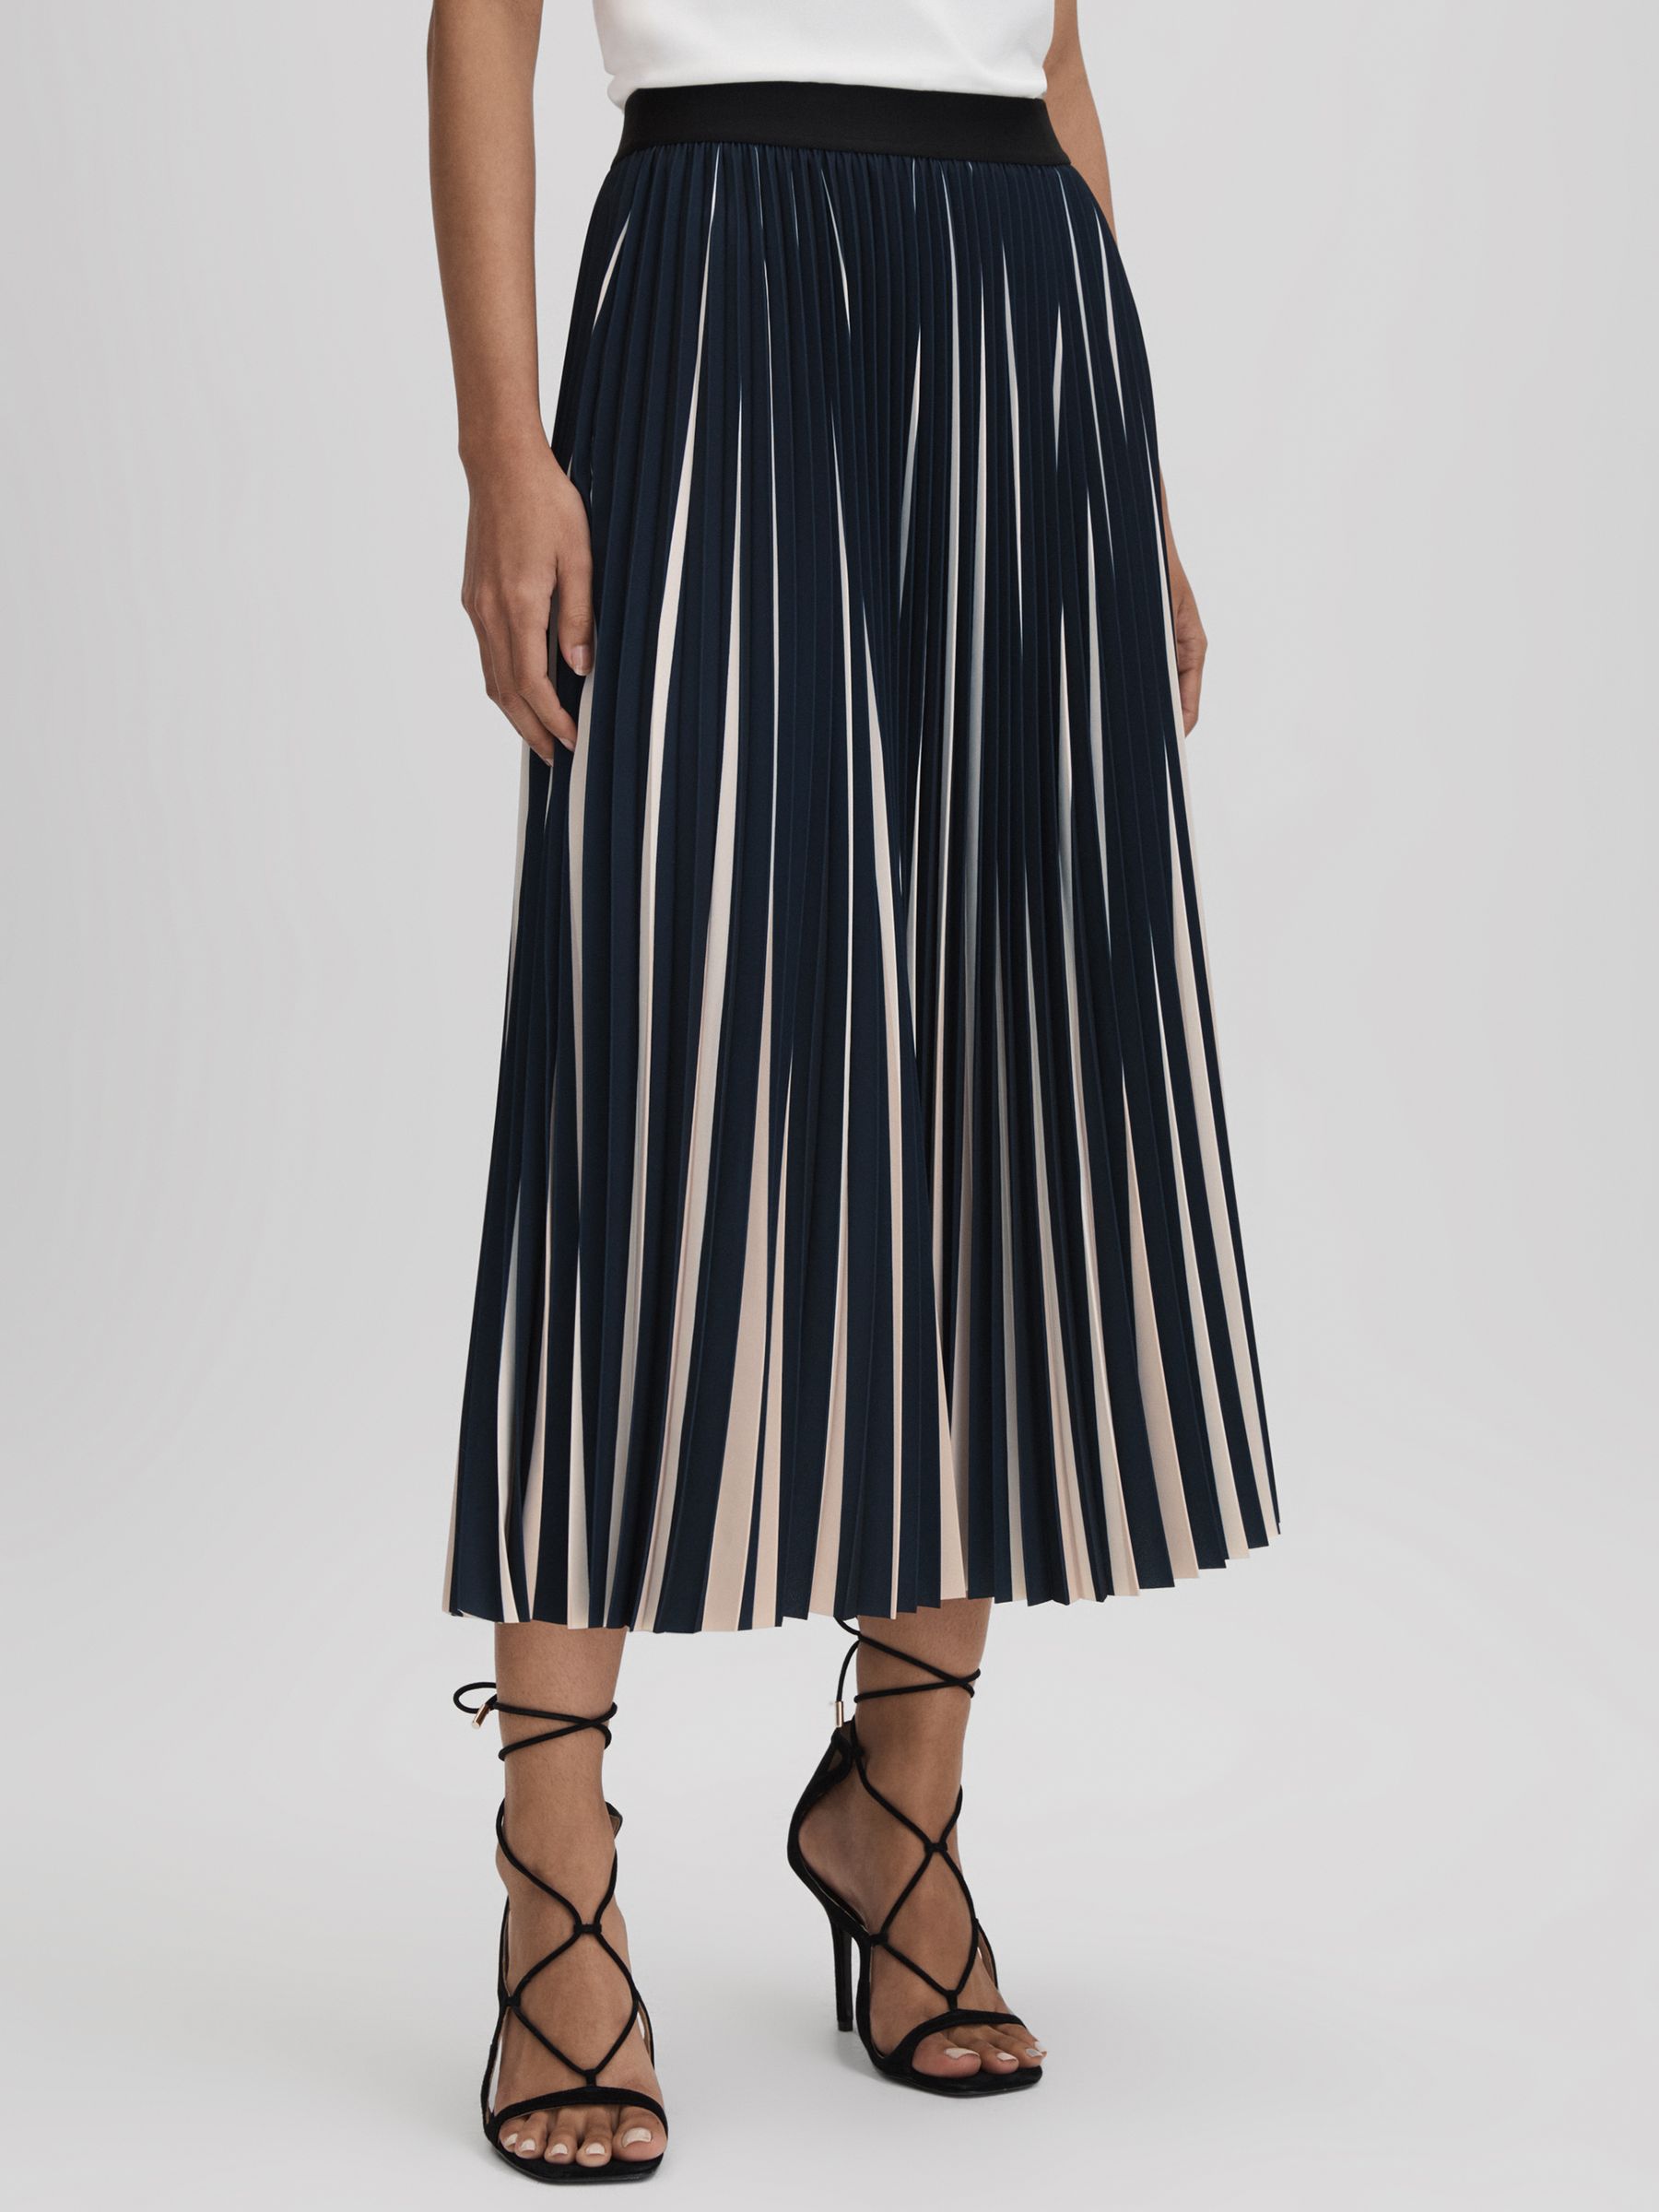 Reiss Saige Pleated Striped Midi Skirt | REISS USA